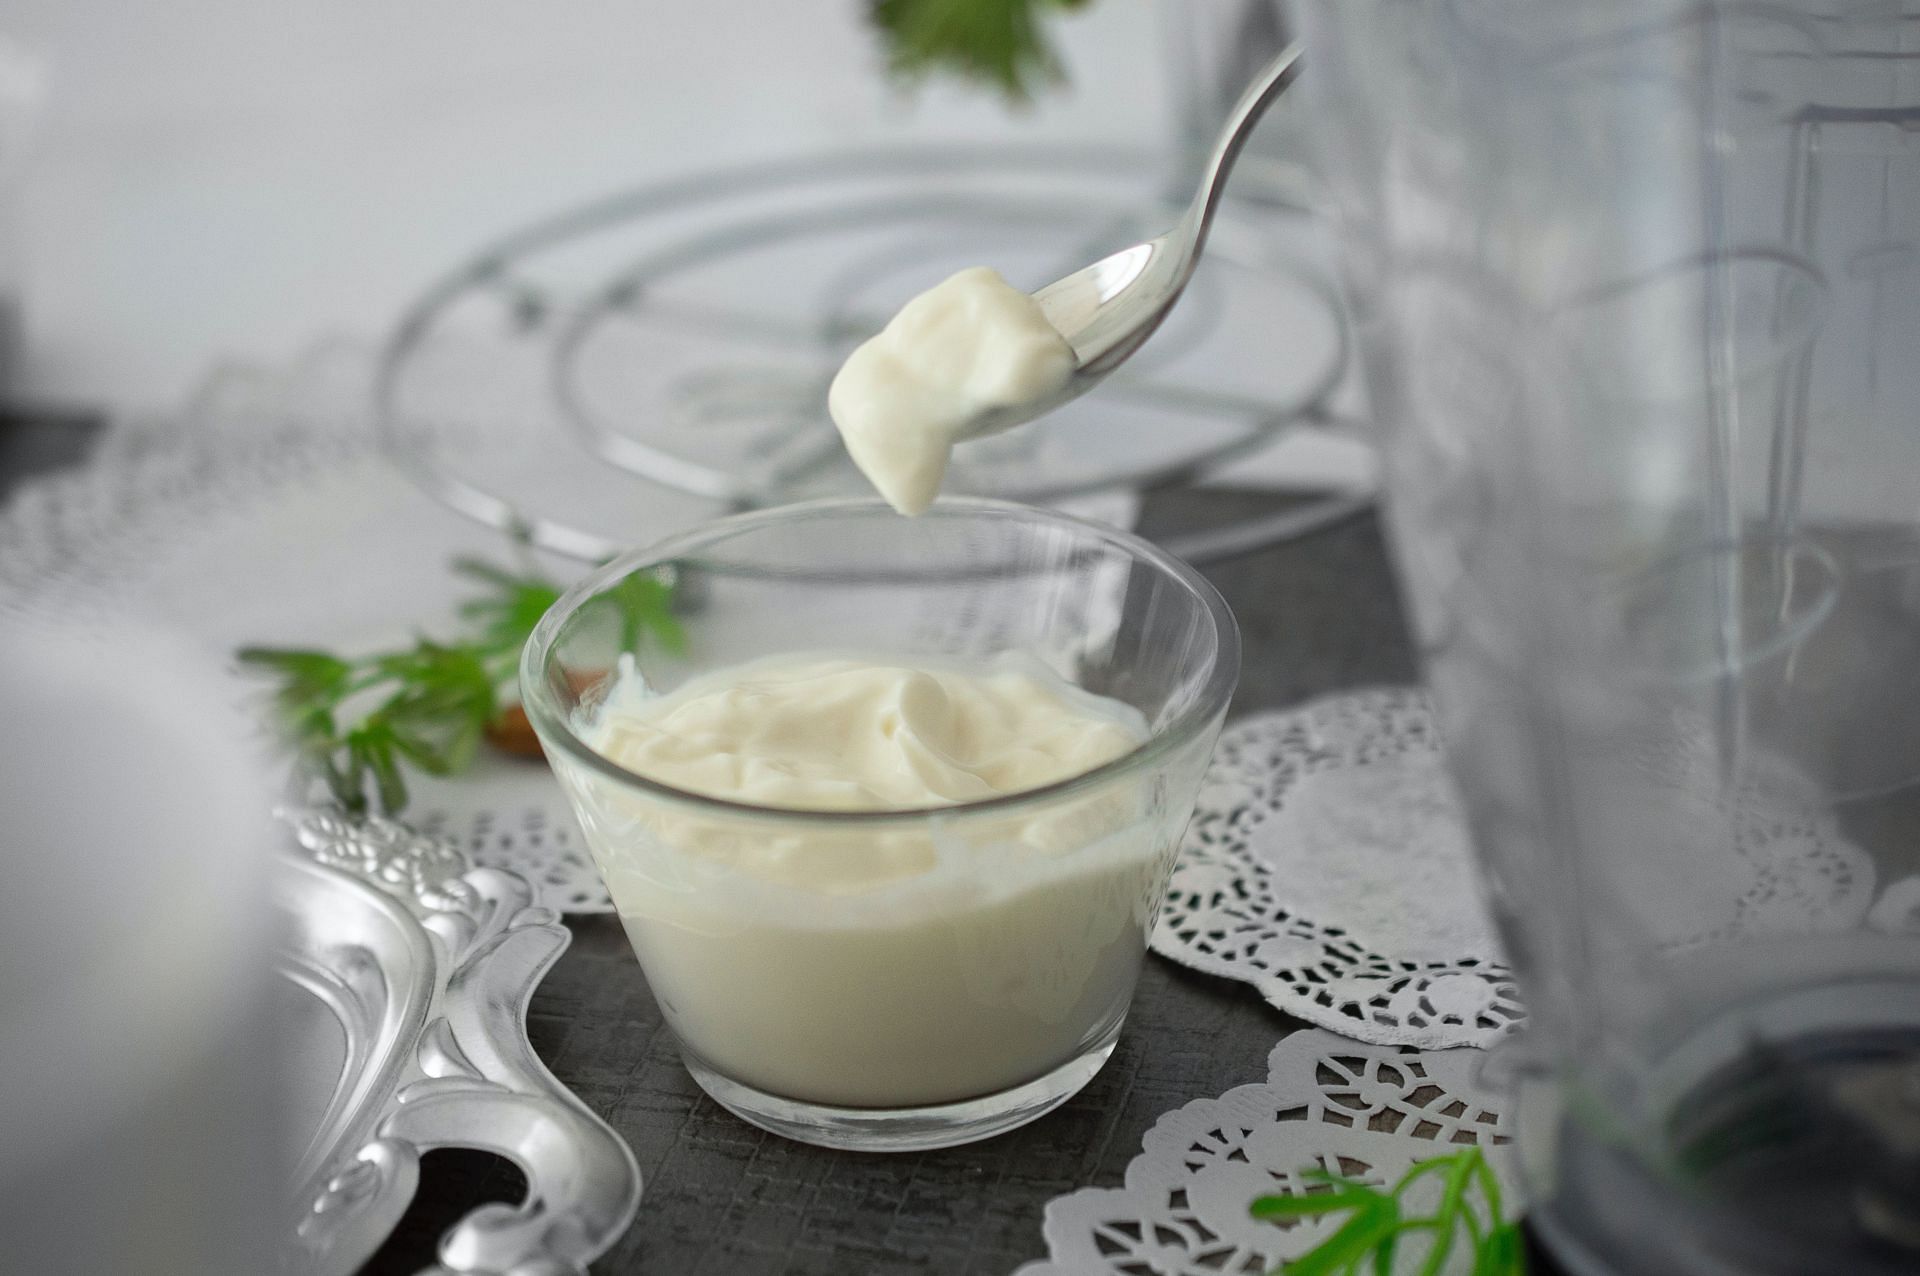 Plain yogurt can be a good snack. (Image Via Unsplash/Sara Cervera)